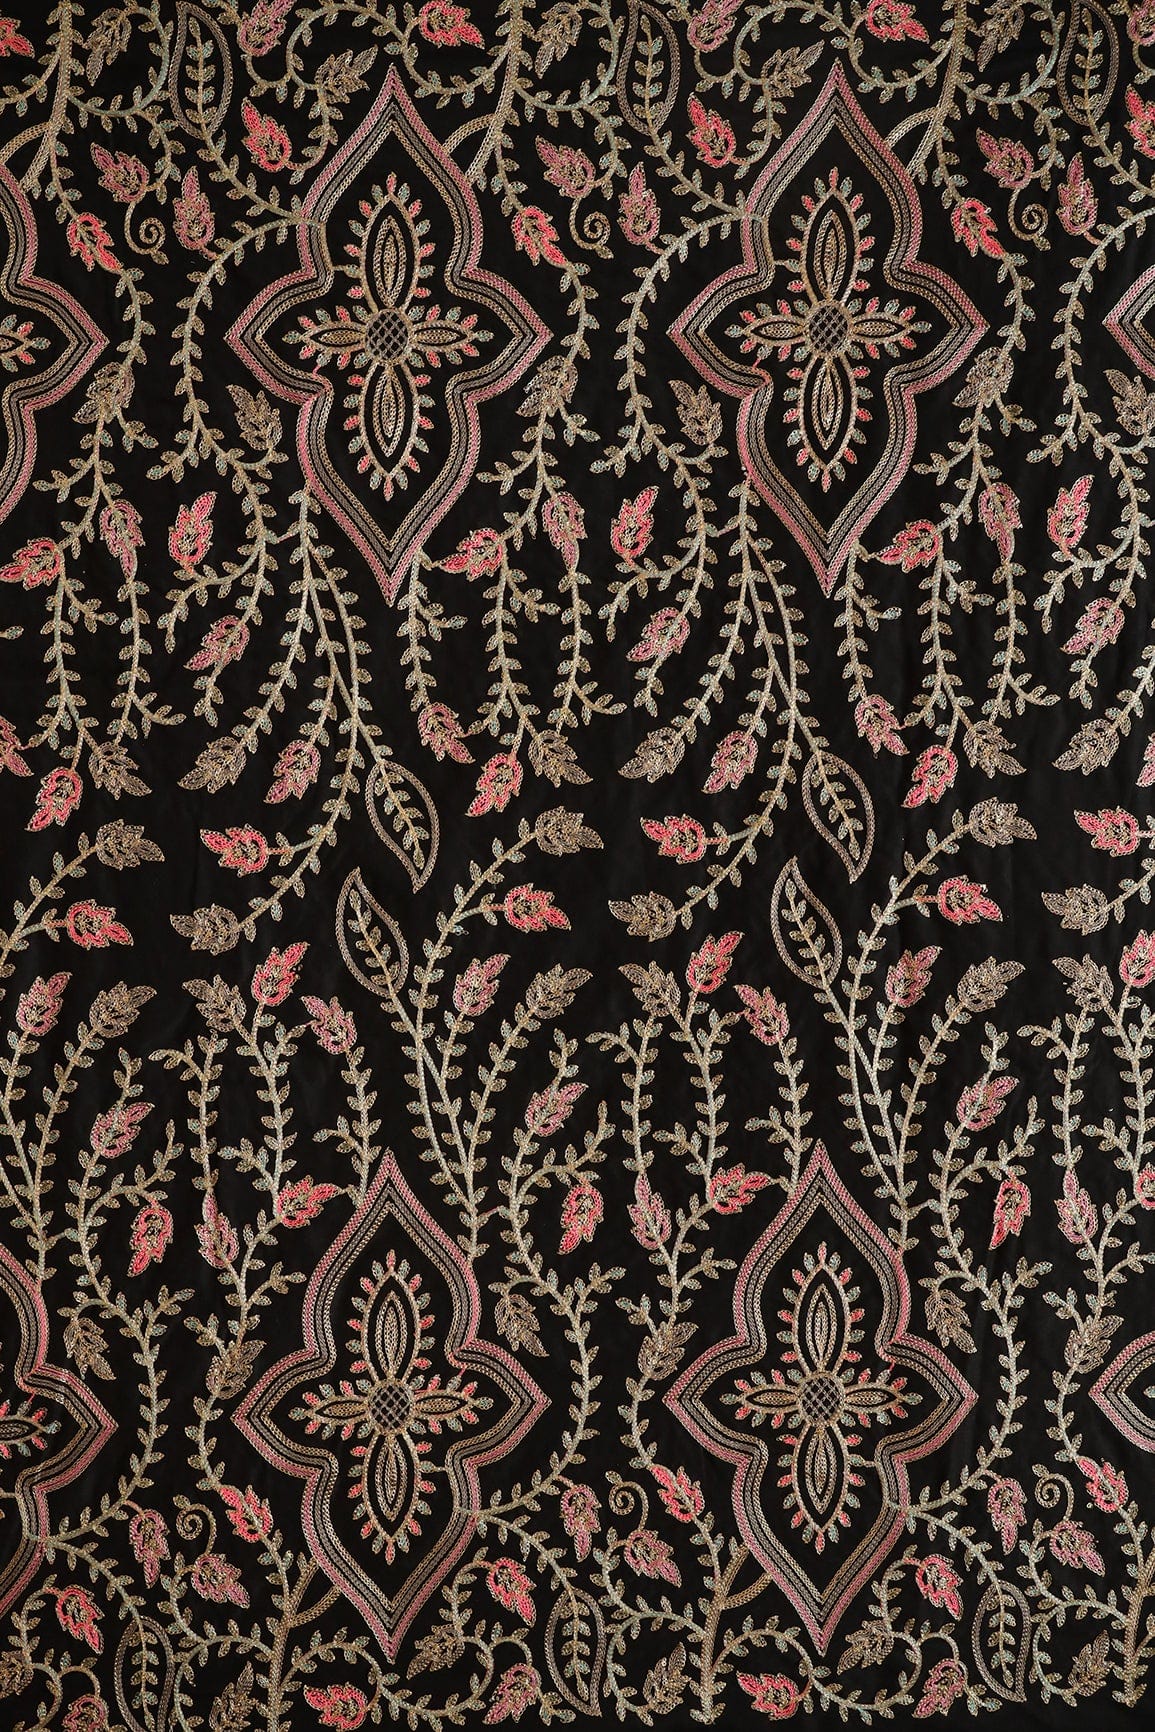 doeraa Embroidery Fabrics Multi Thread Beautiful Heavy Traditional Kashmiri Embroidery Work On Black Cotton Fabric